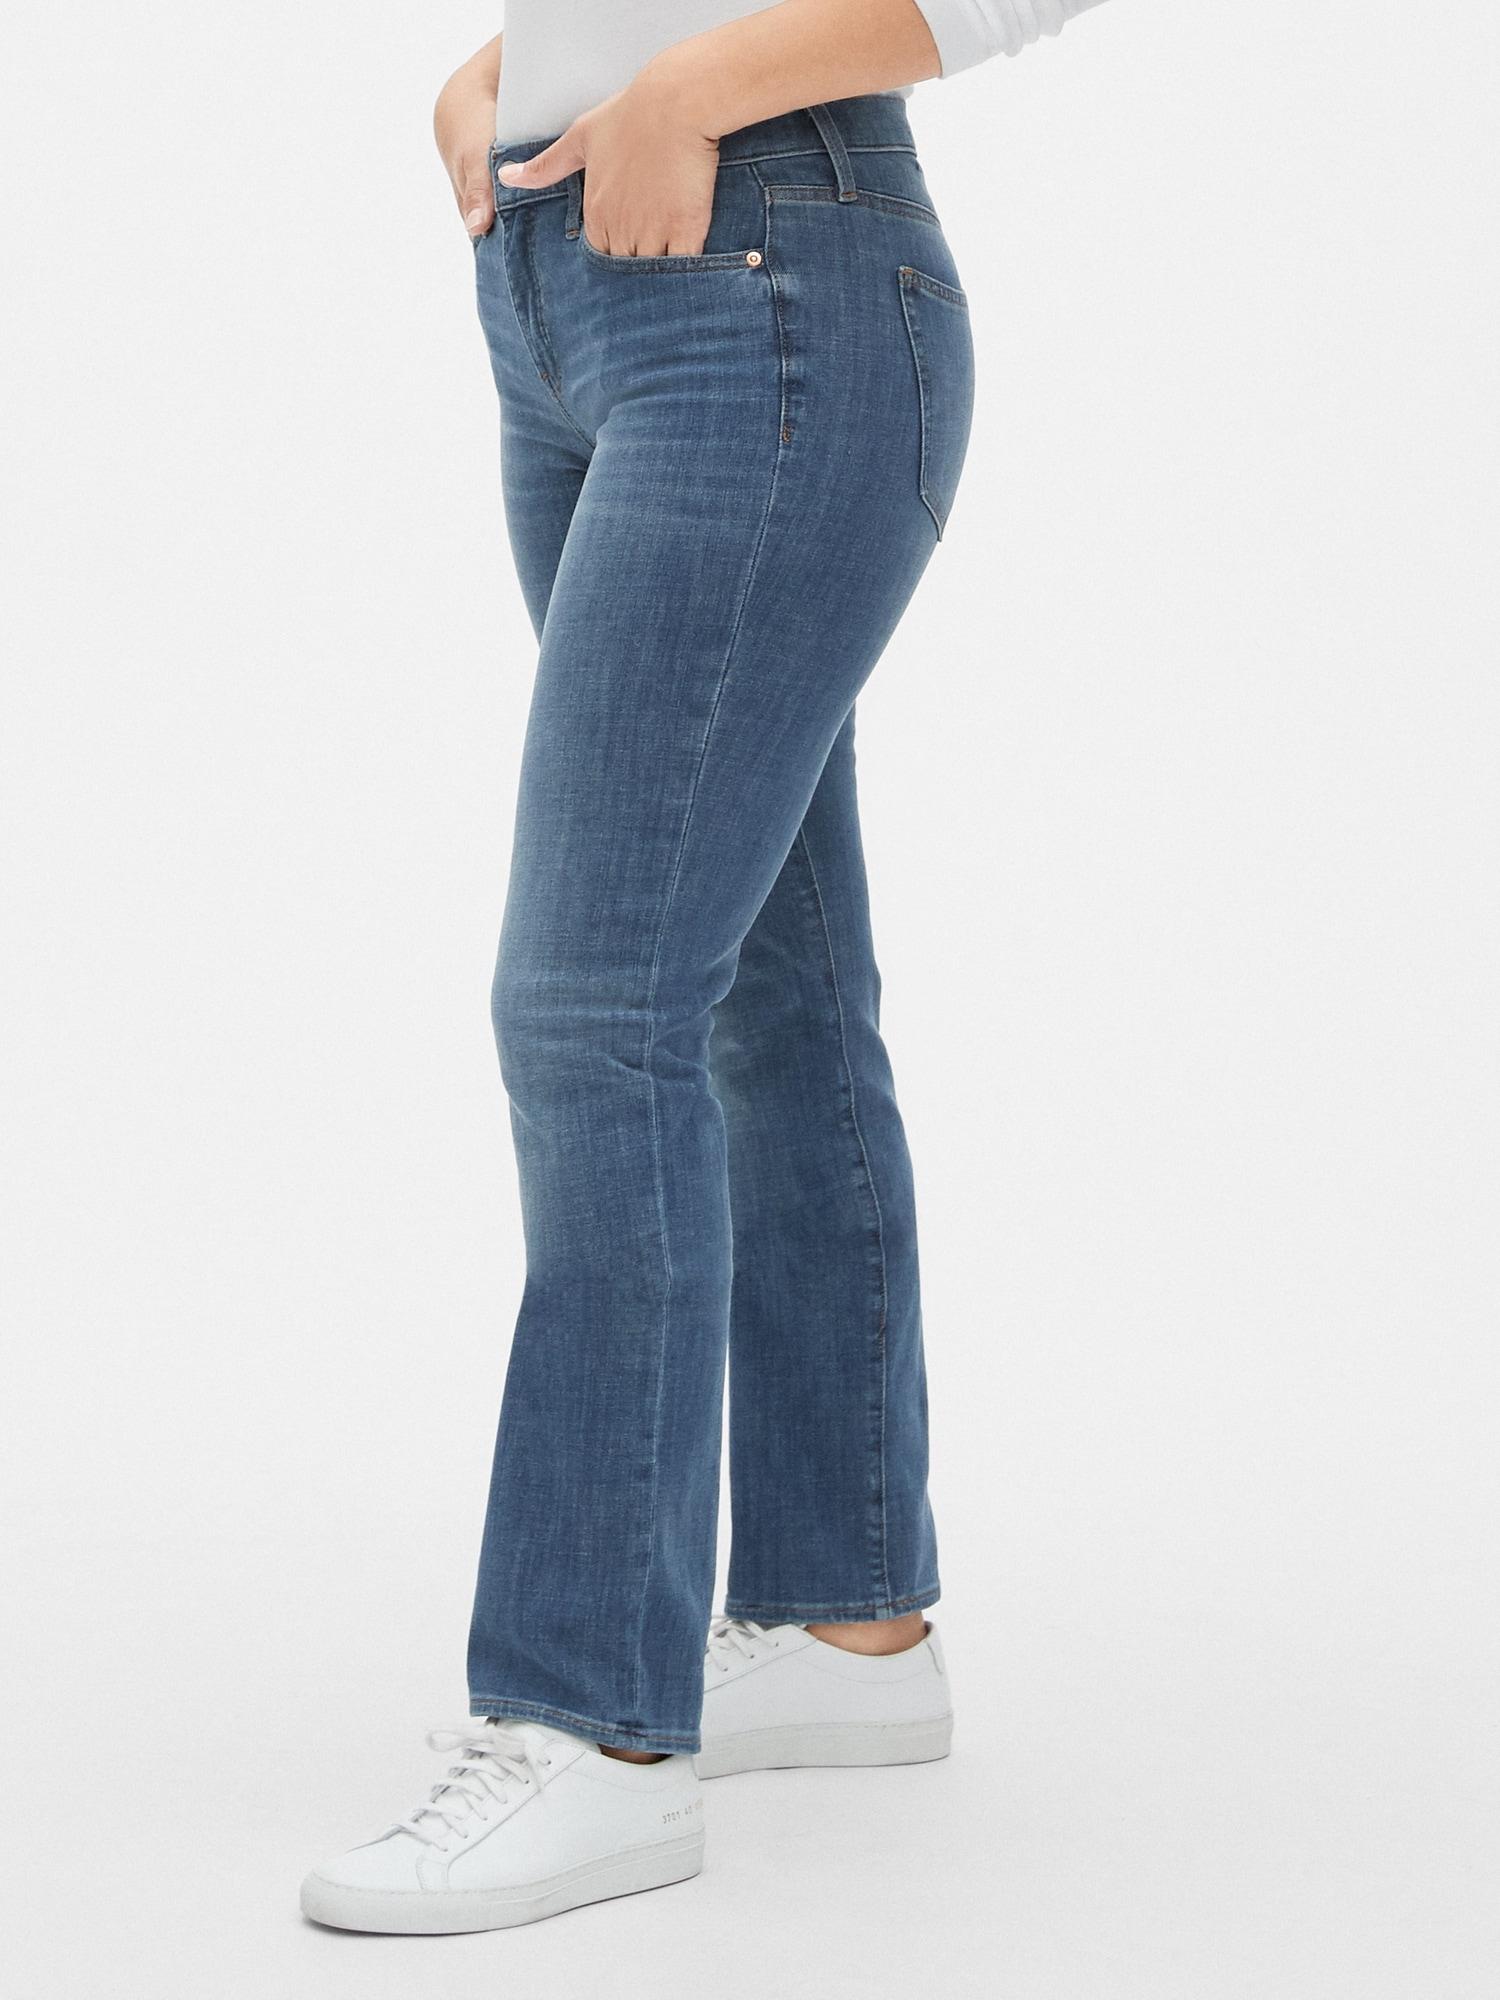 gap 360 jeans